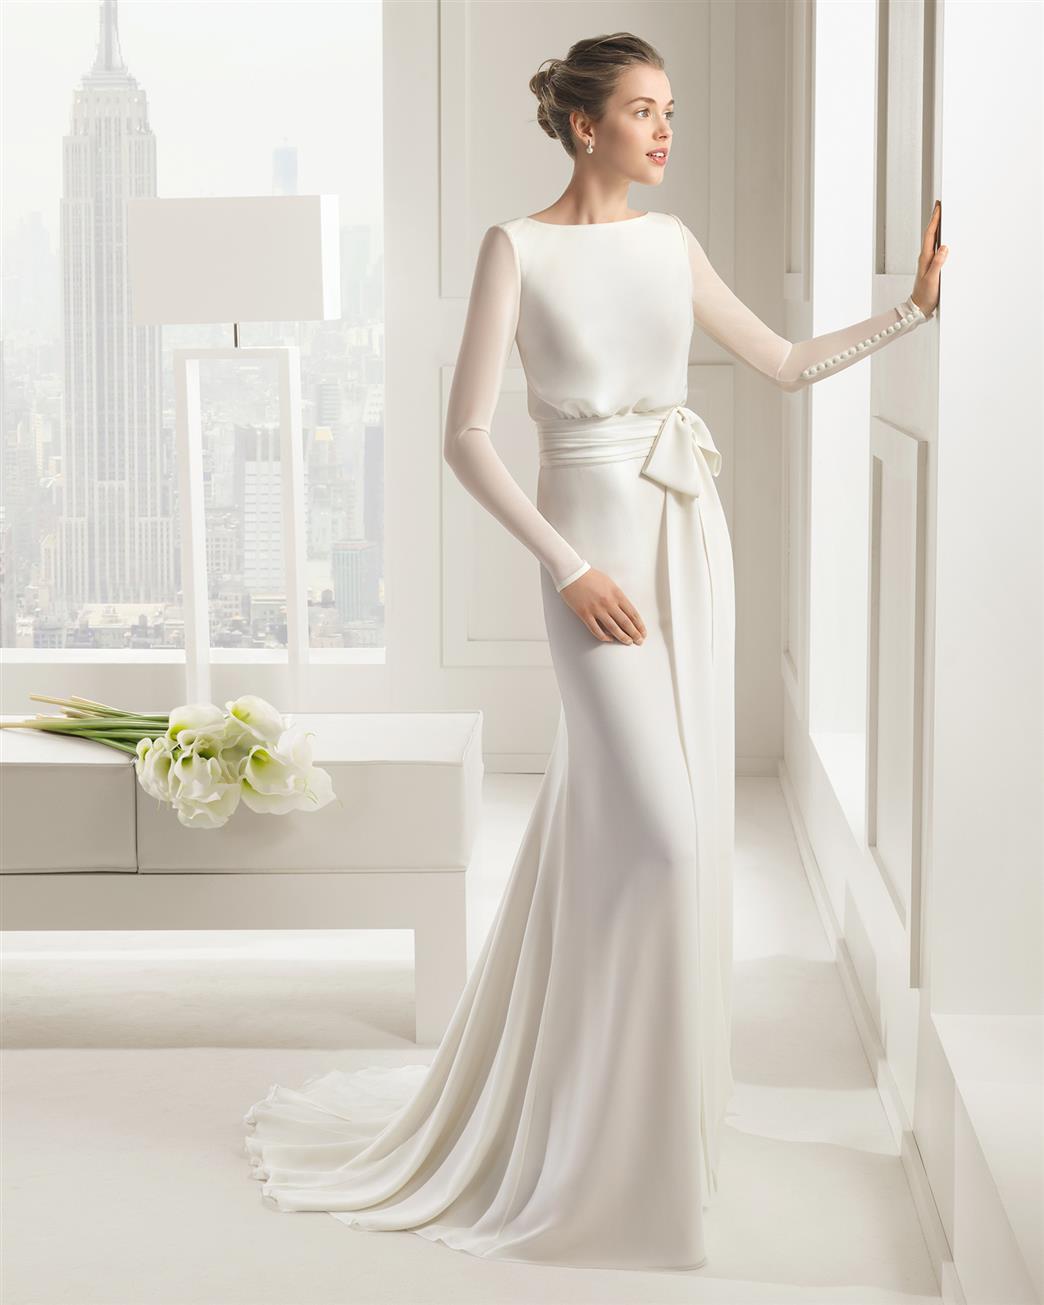 Long Sleeve Wedding Dress from Rosa Clara 2015 Collection - Sal